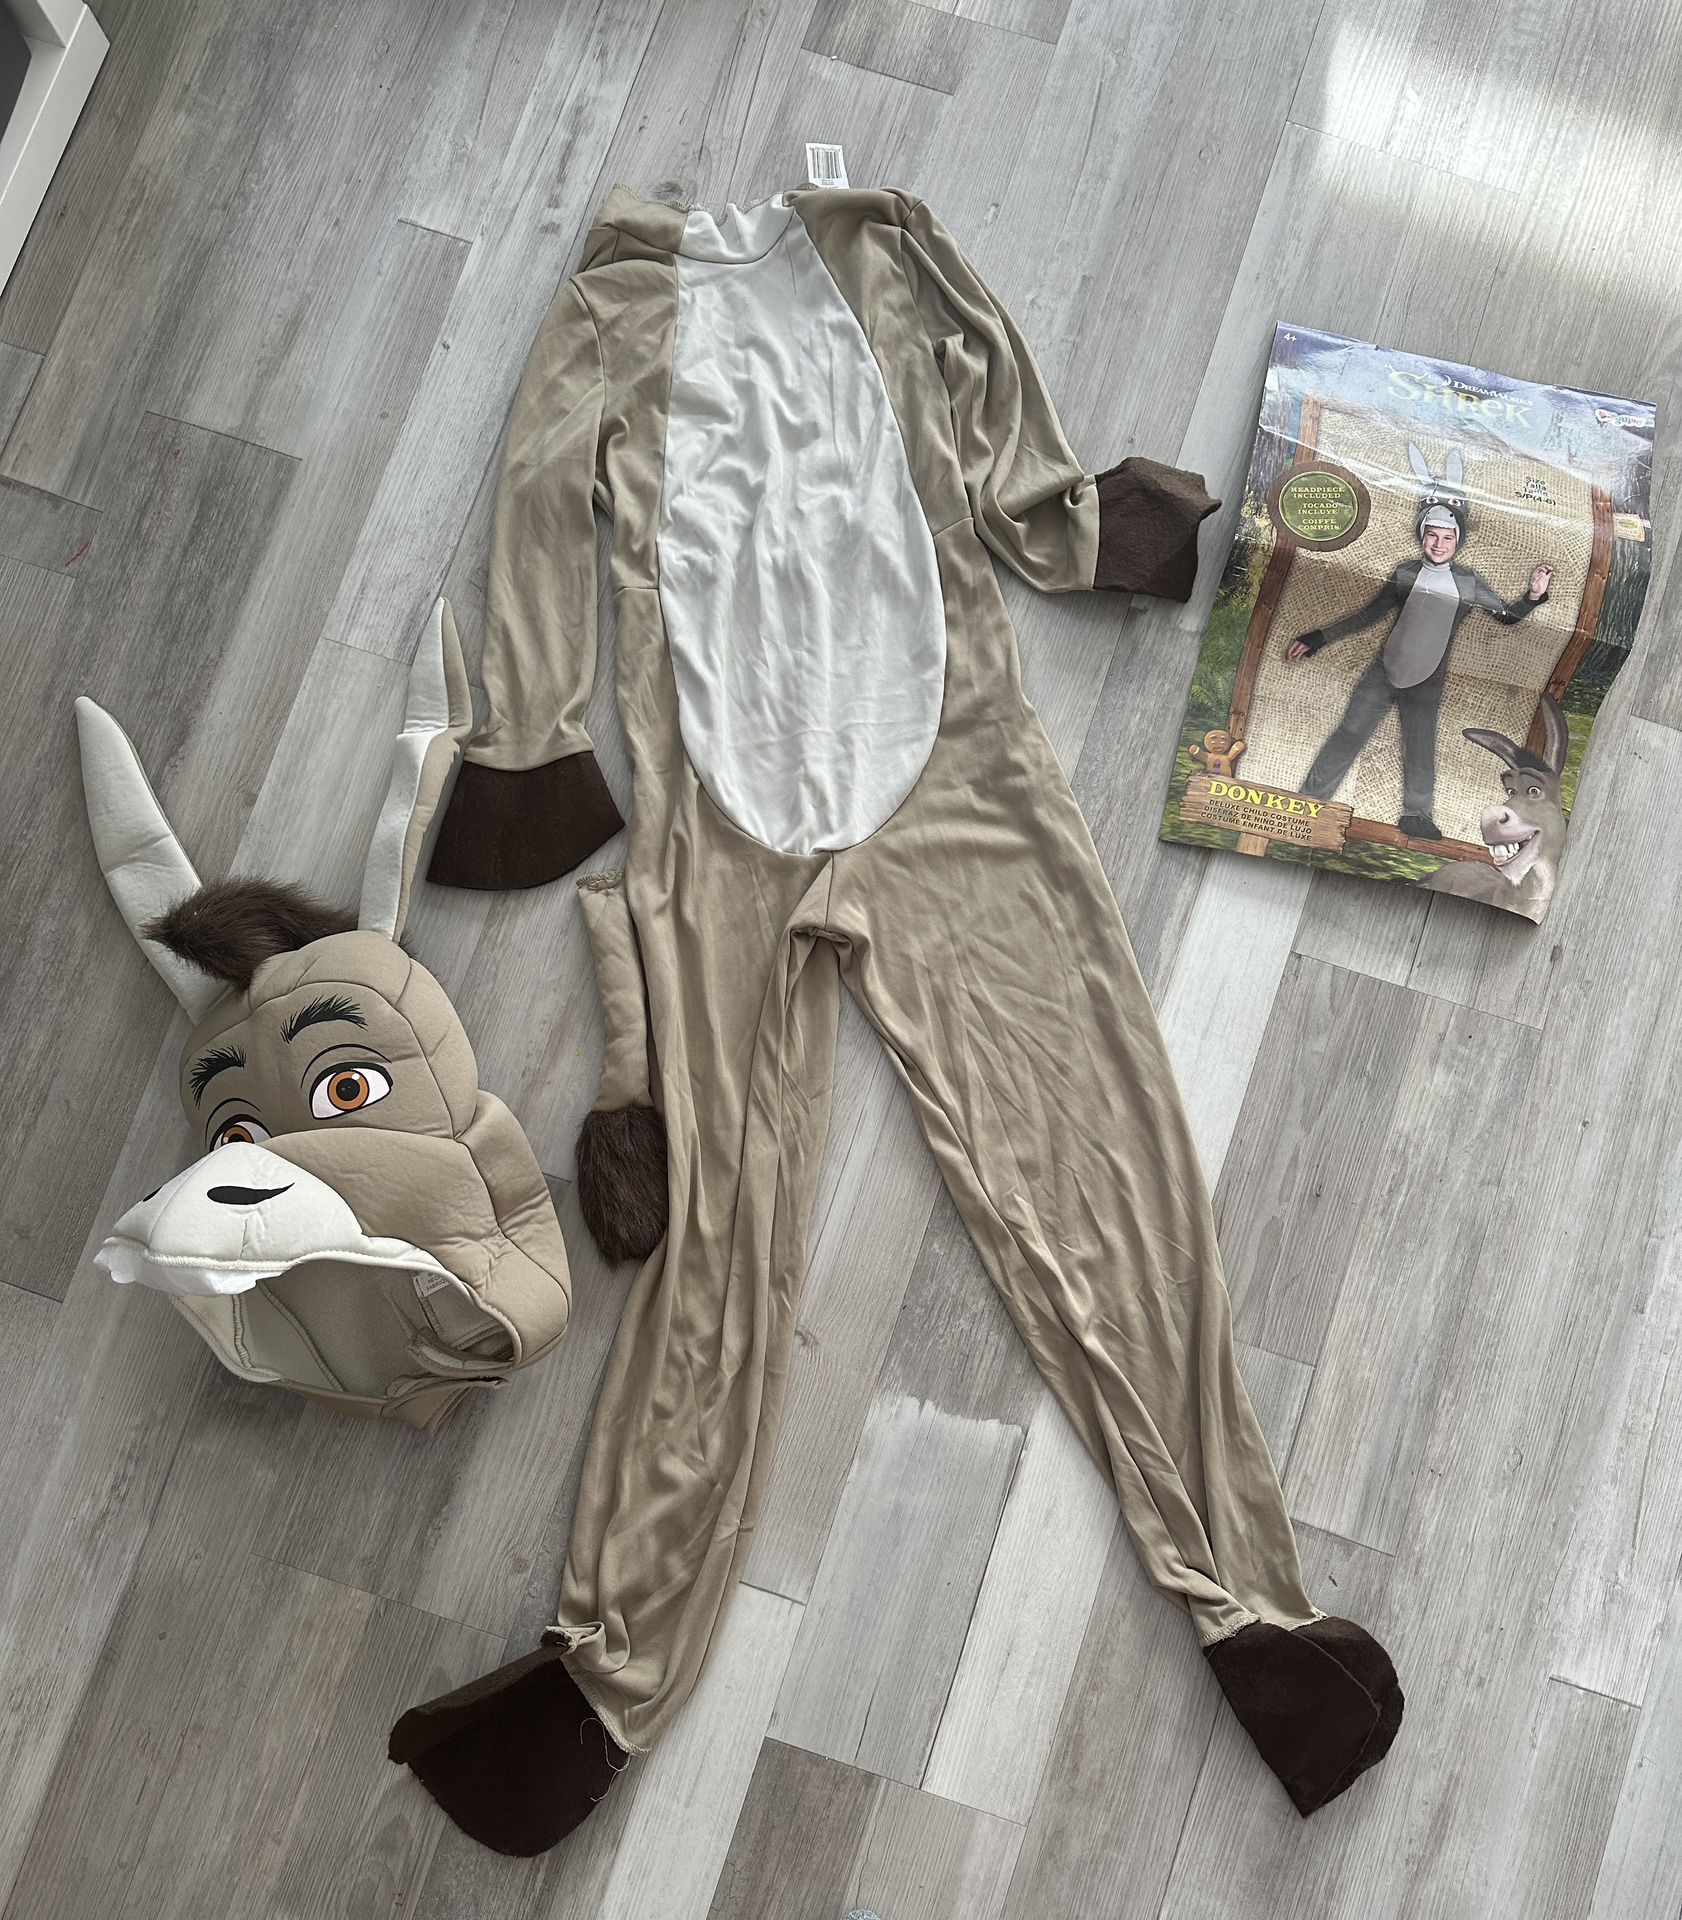 Donkey from Shrek costume size 4-6